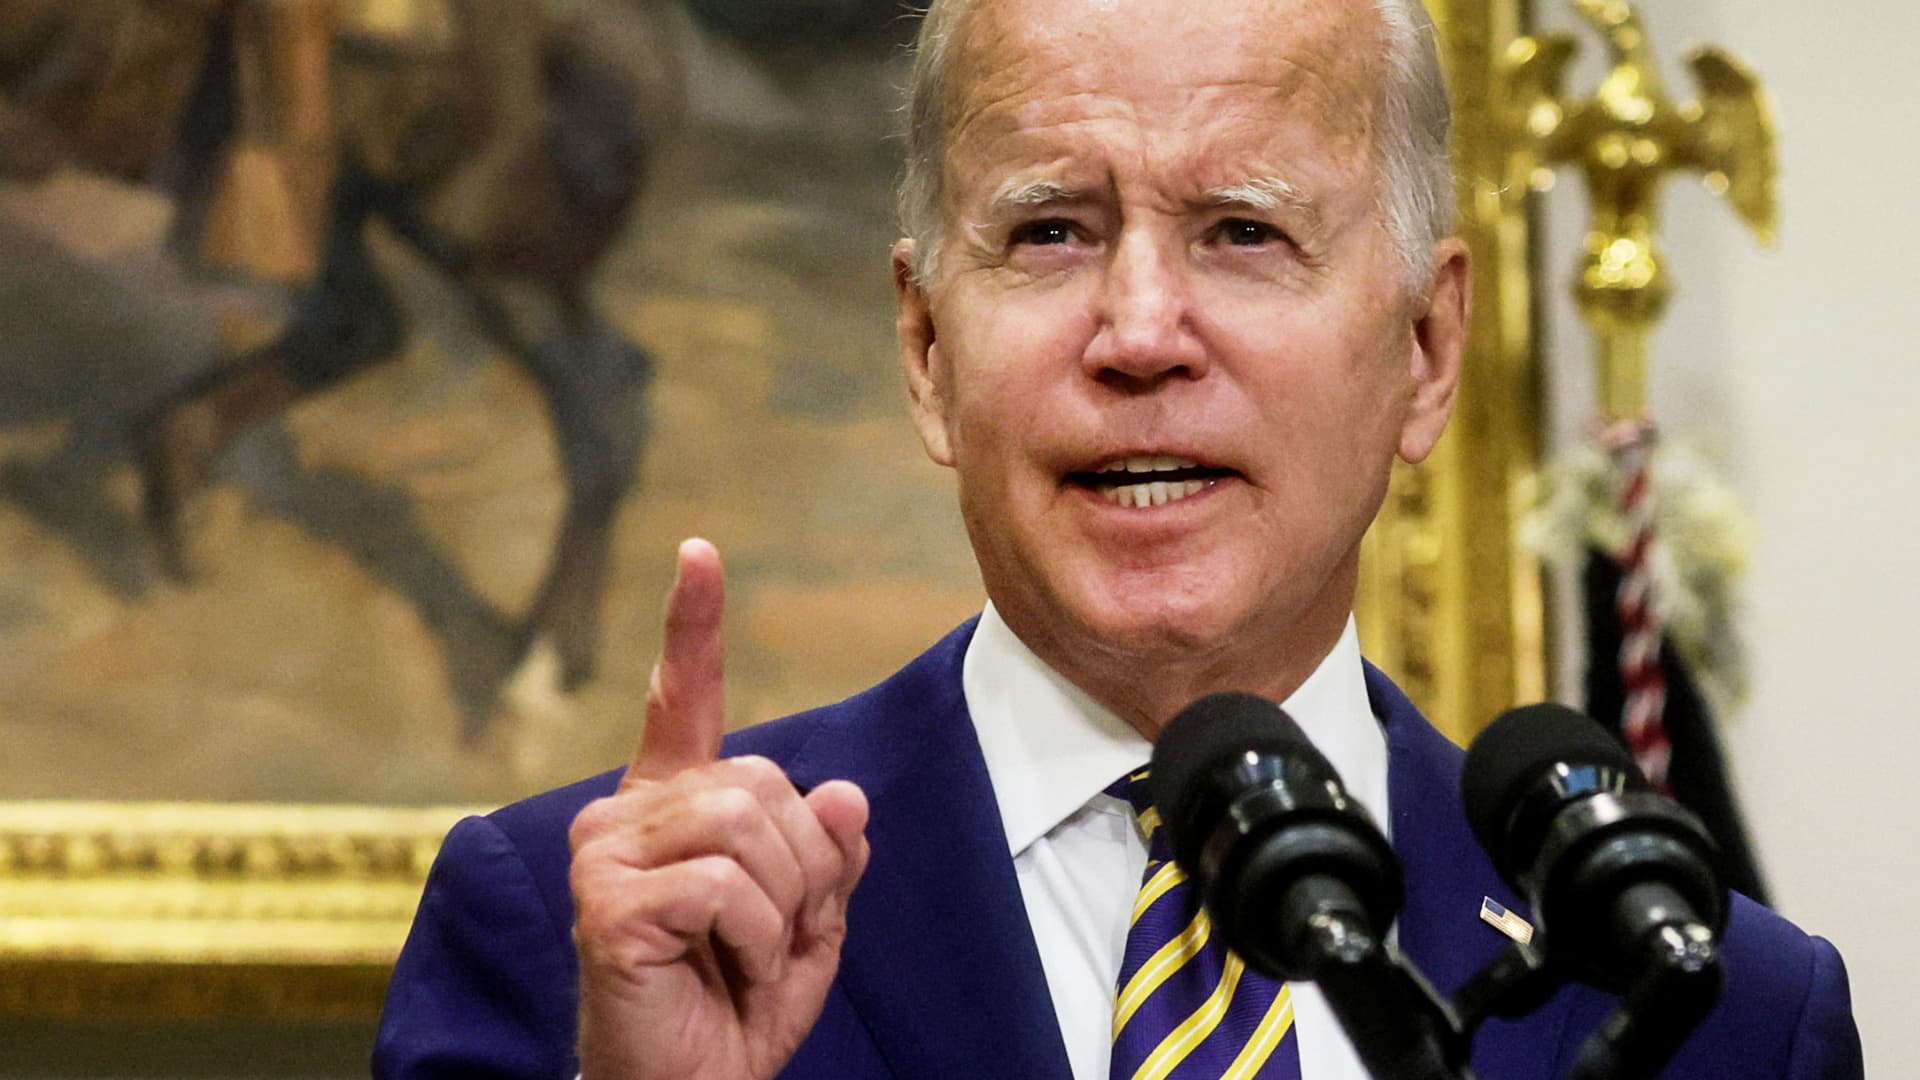 813,000 borrowers get email from President Joe Biden on student loan forgiveness